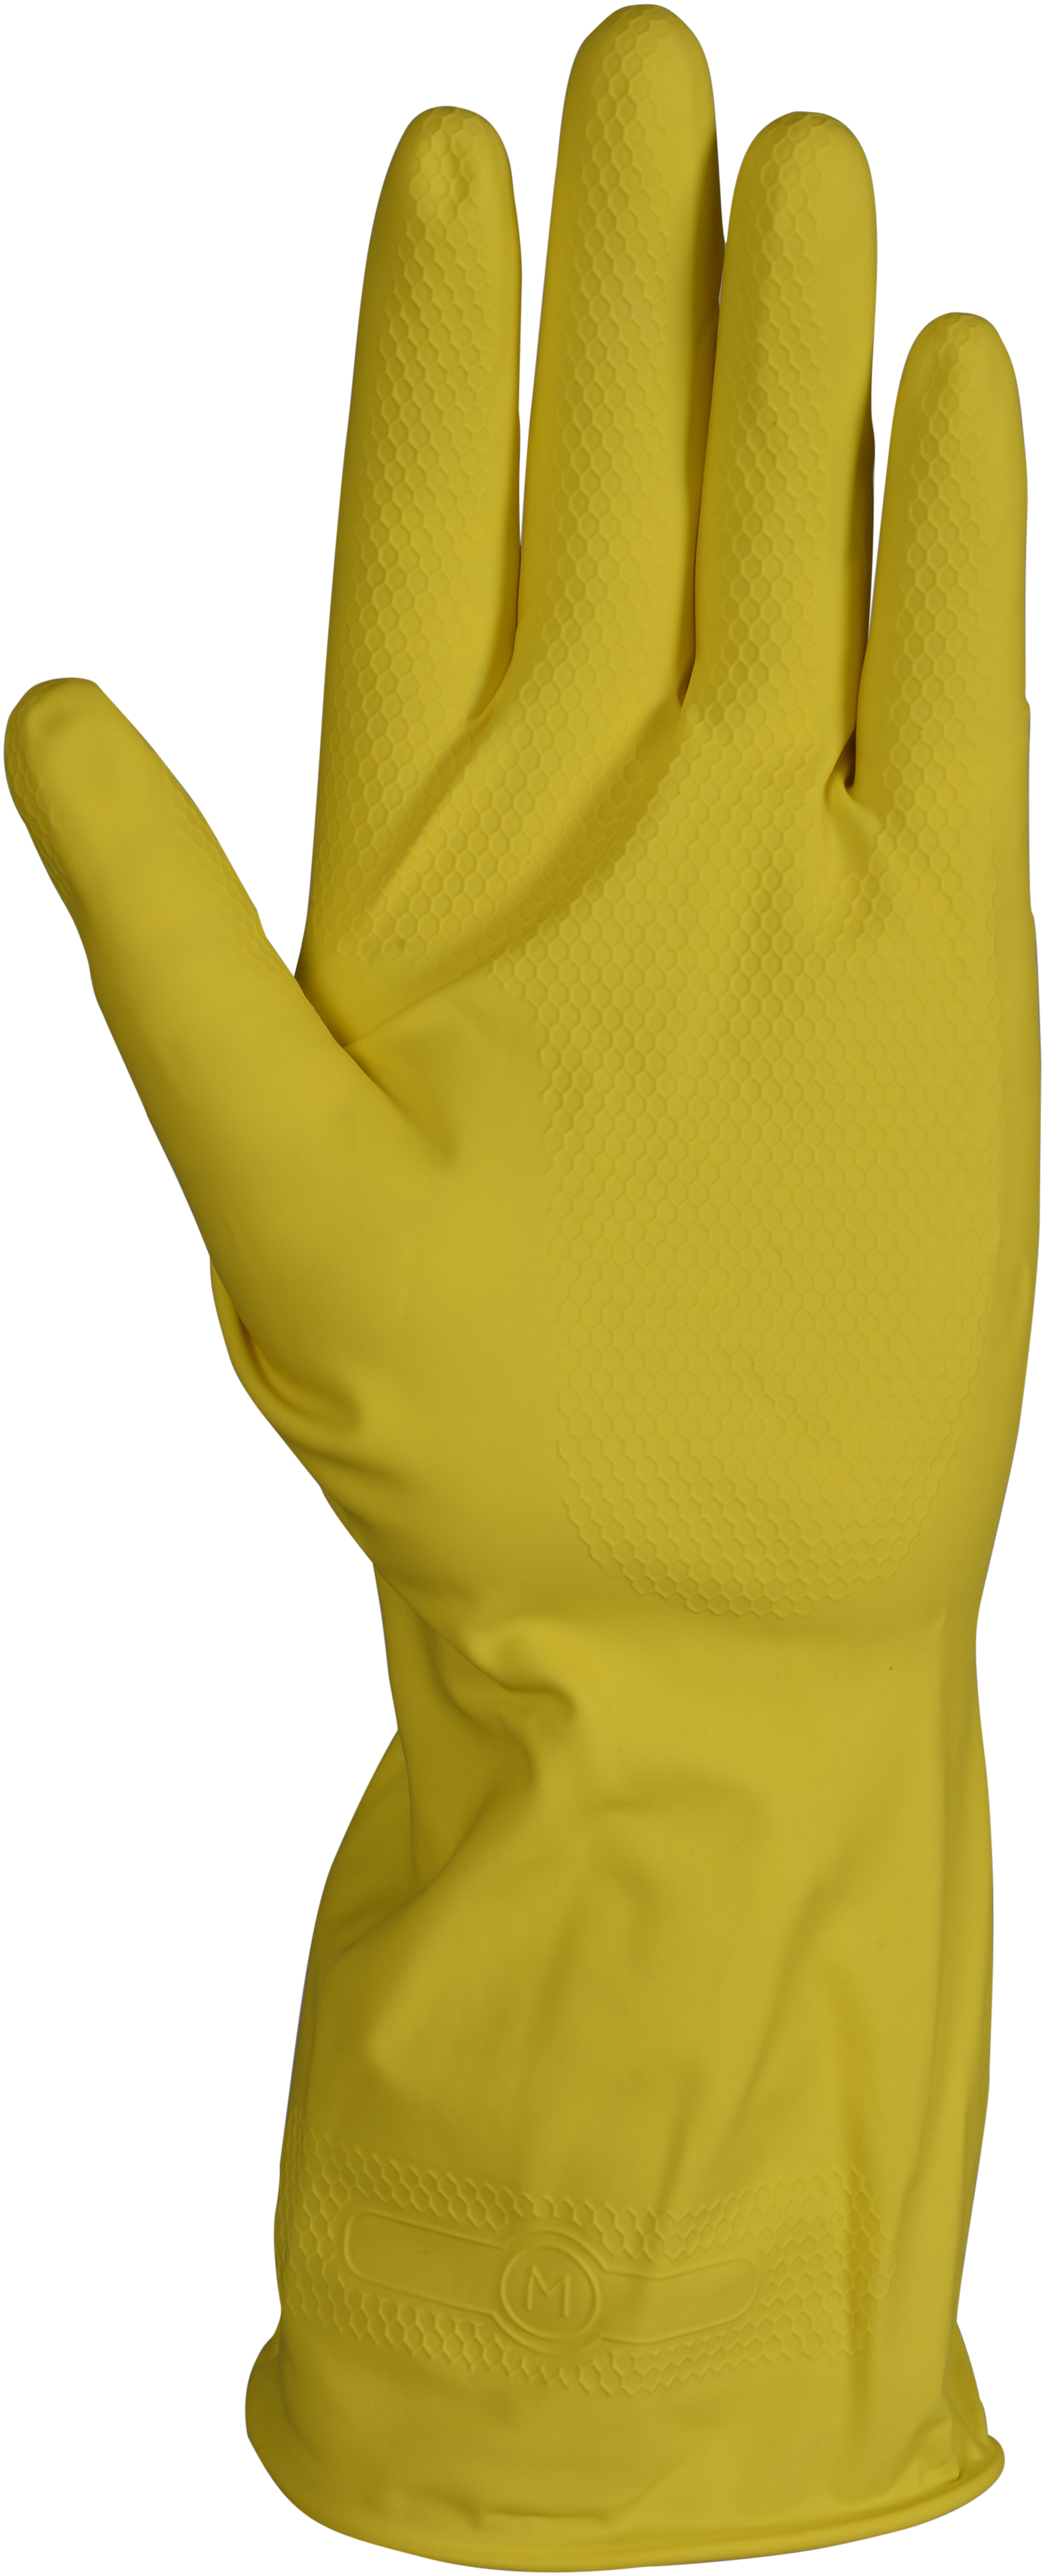 Handschuh Latex Multipurpose gelb 